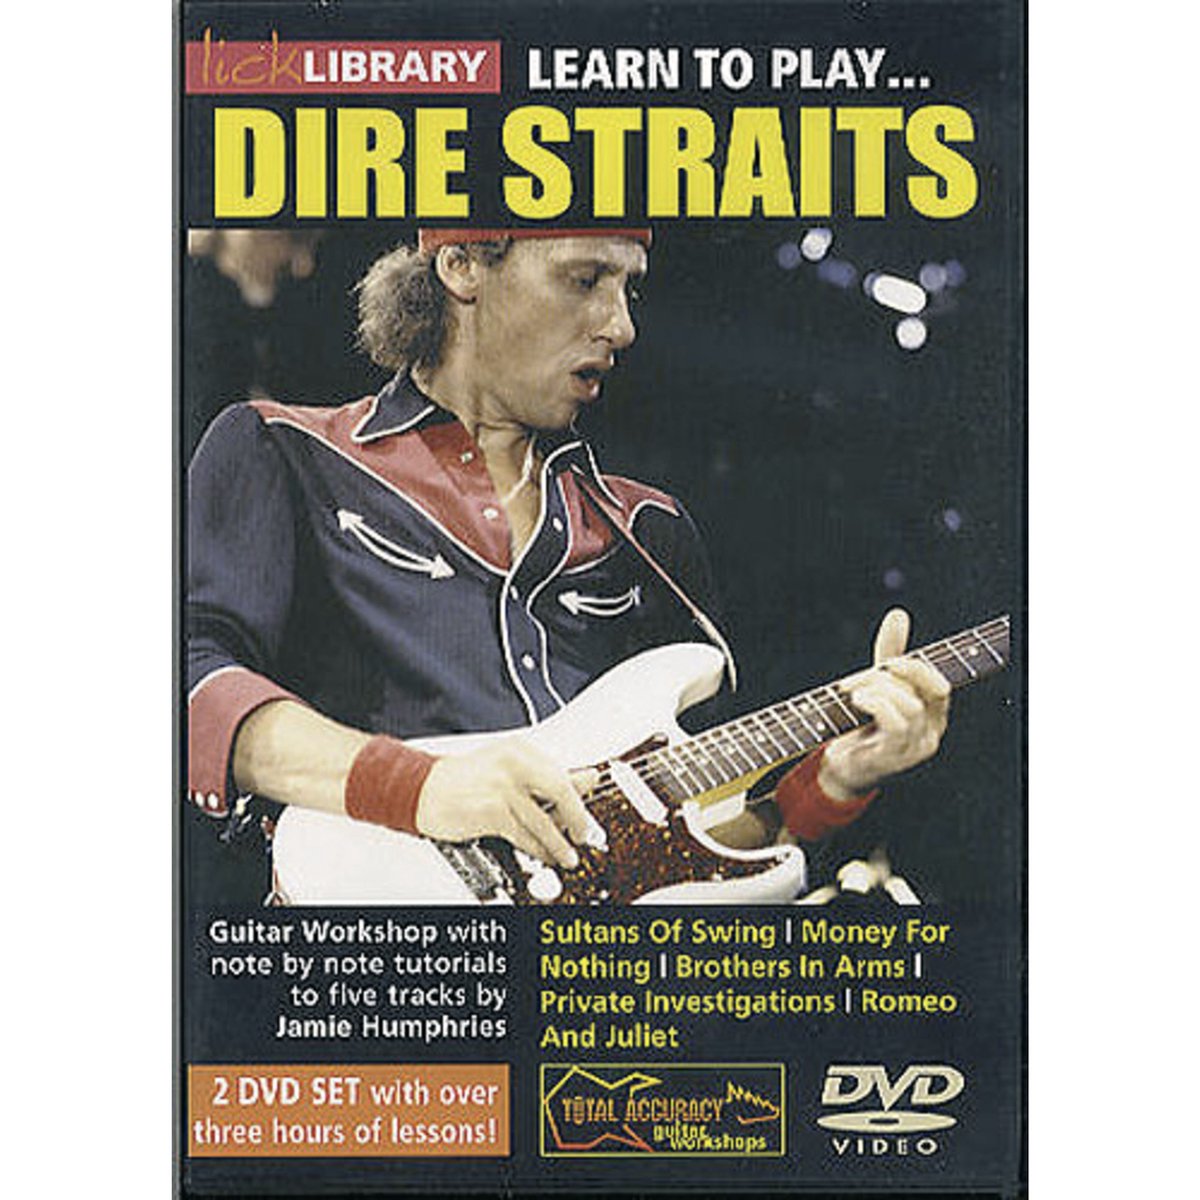 Roadrock International Lick Library - Dire Straits Learn to play (gitaar), DVD - DVD / CD / Multimedia: C - D